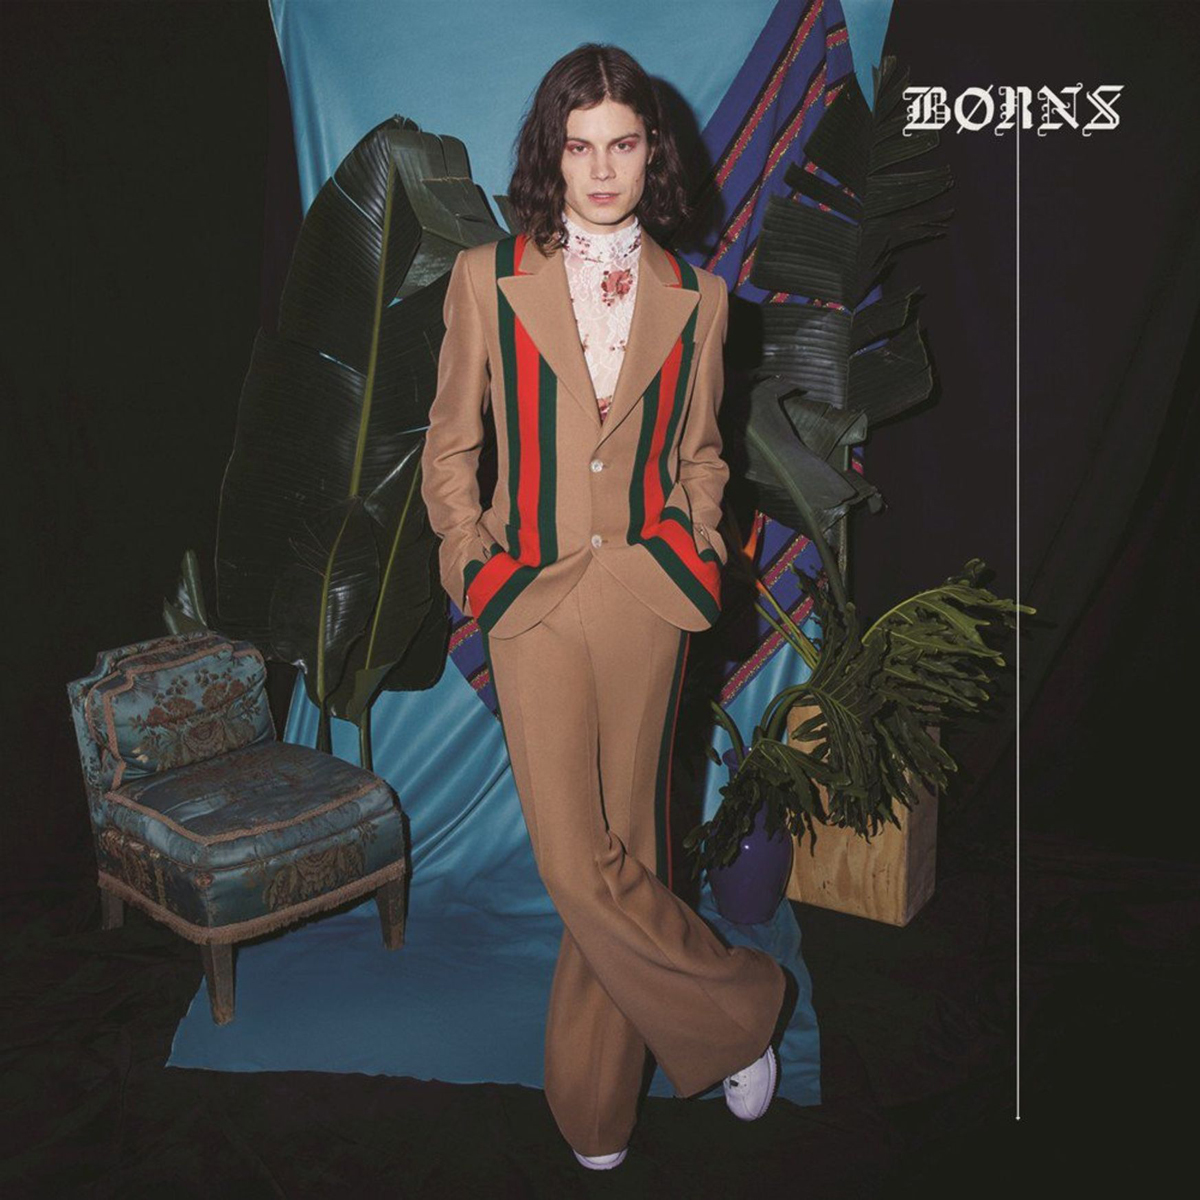 Indie pop singer BORNS releases sophomore album The Triangle